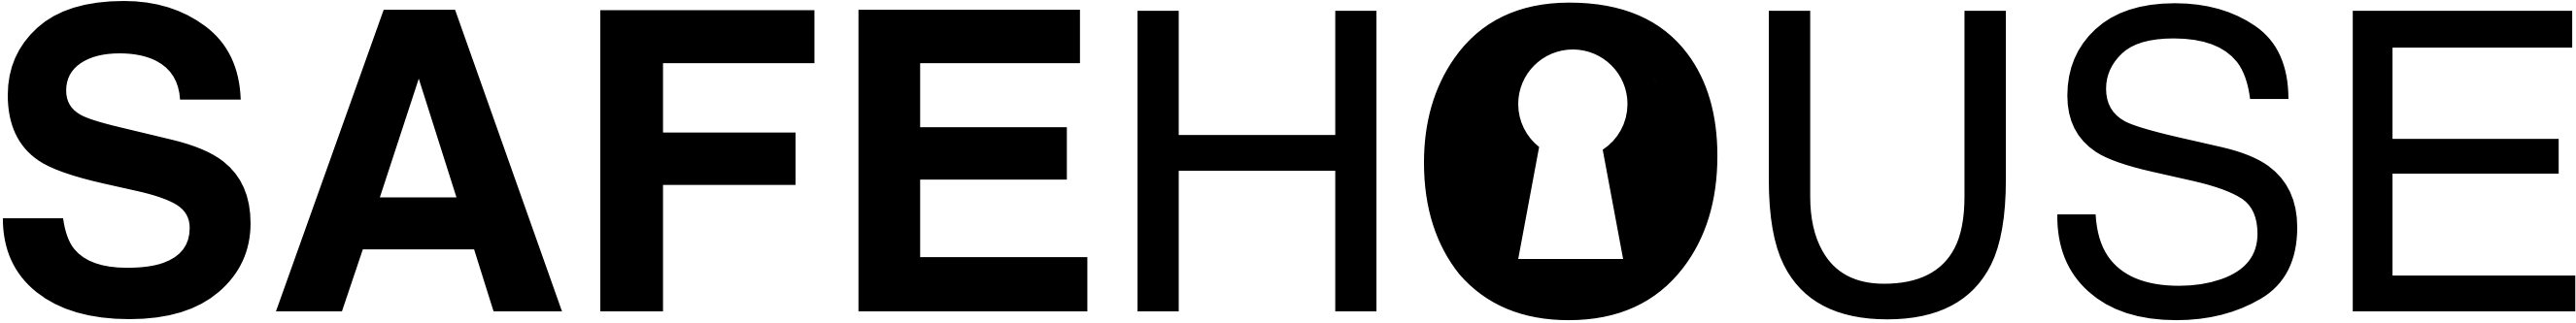 Safehouse logo